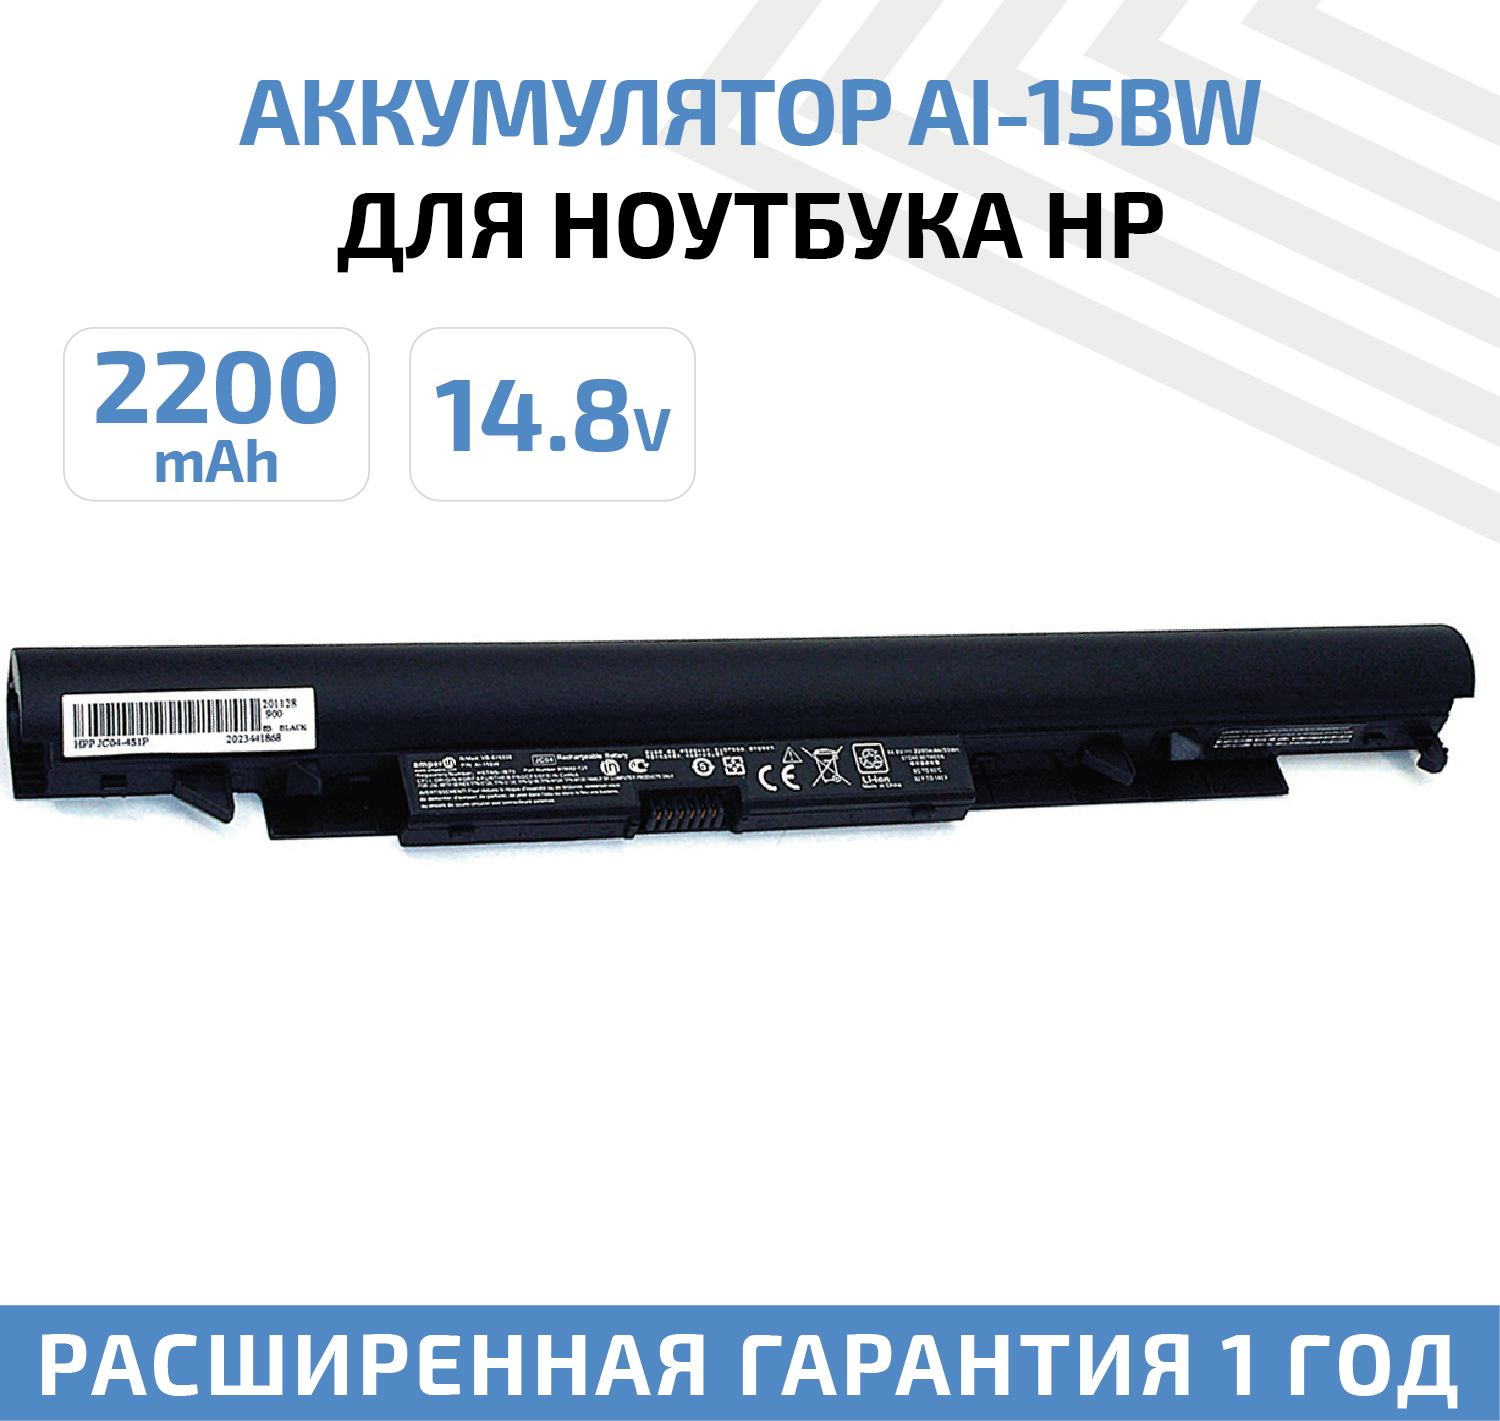 Аккумулятор (АКБ, аккумуляторная батарея) Amperin AI-15BW для ноутбука HP 15-BW (JC04), 14.8В, 2200мАч, Li-Ion, черный